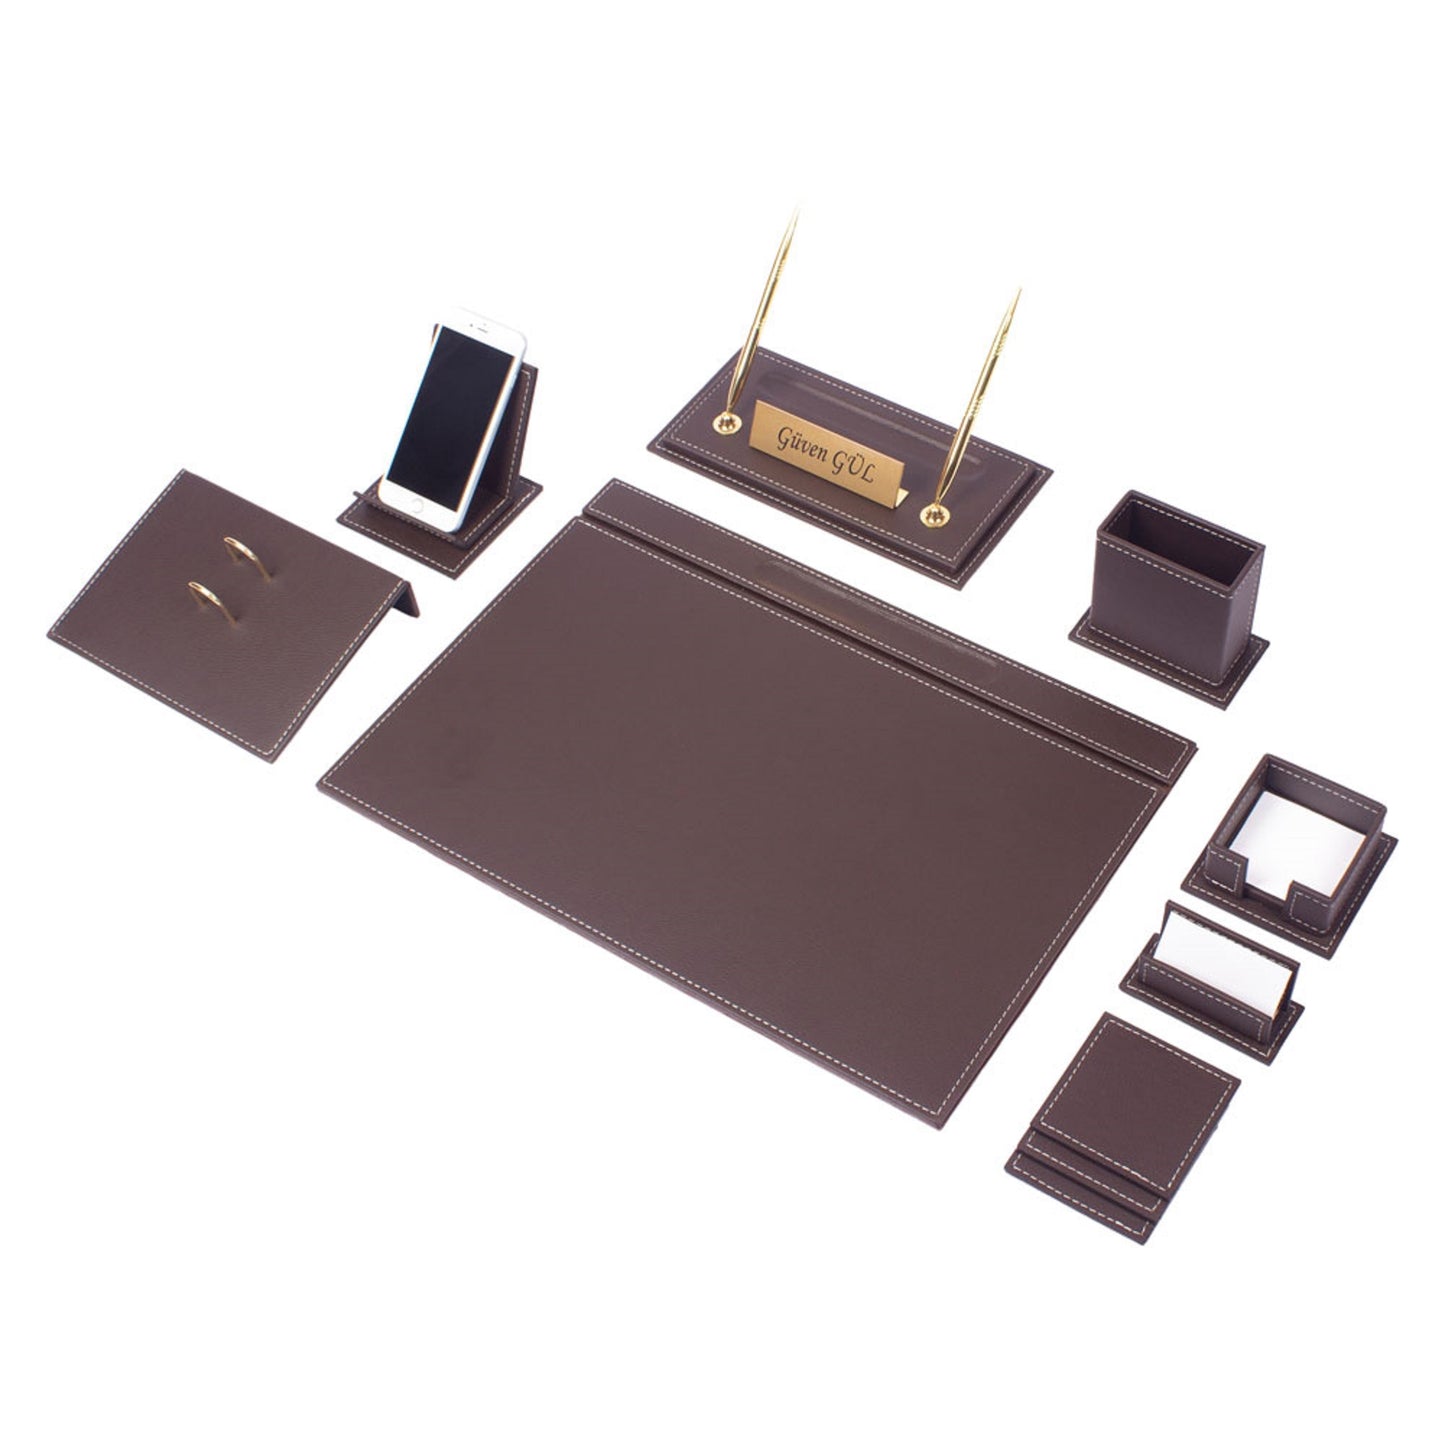 MOOG 12 Pieces Luxury Desk Set-Desk Office Accessories-Storage-Desk Organizers And Accessories-Office Desk Accessories-Desk Organizer Set-Desk Pads & Blotters - 12 PCS